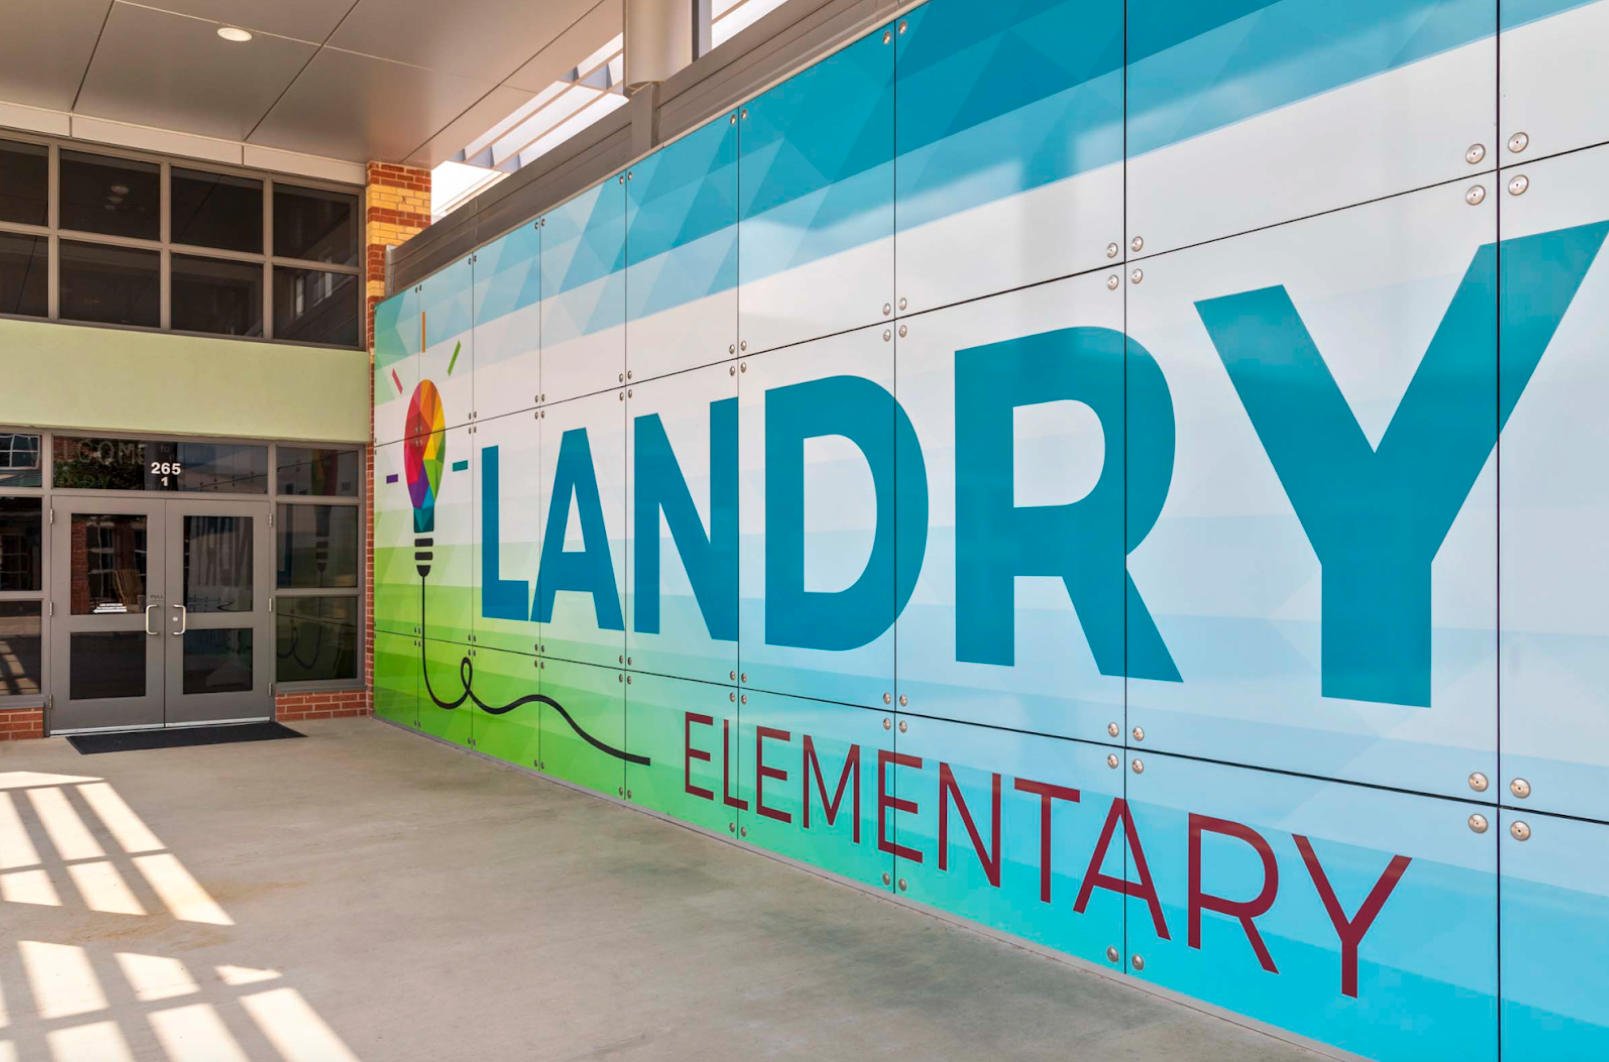 Tom Landry Elementary School in Texas security film grants